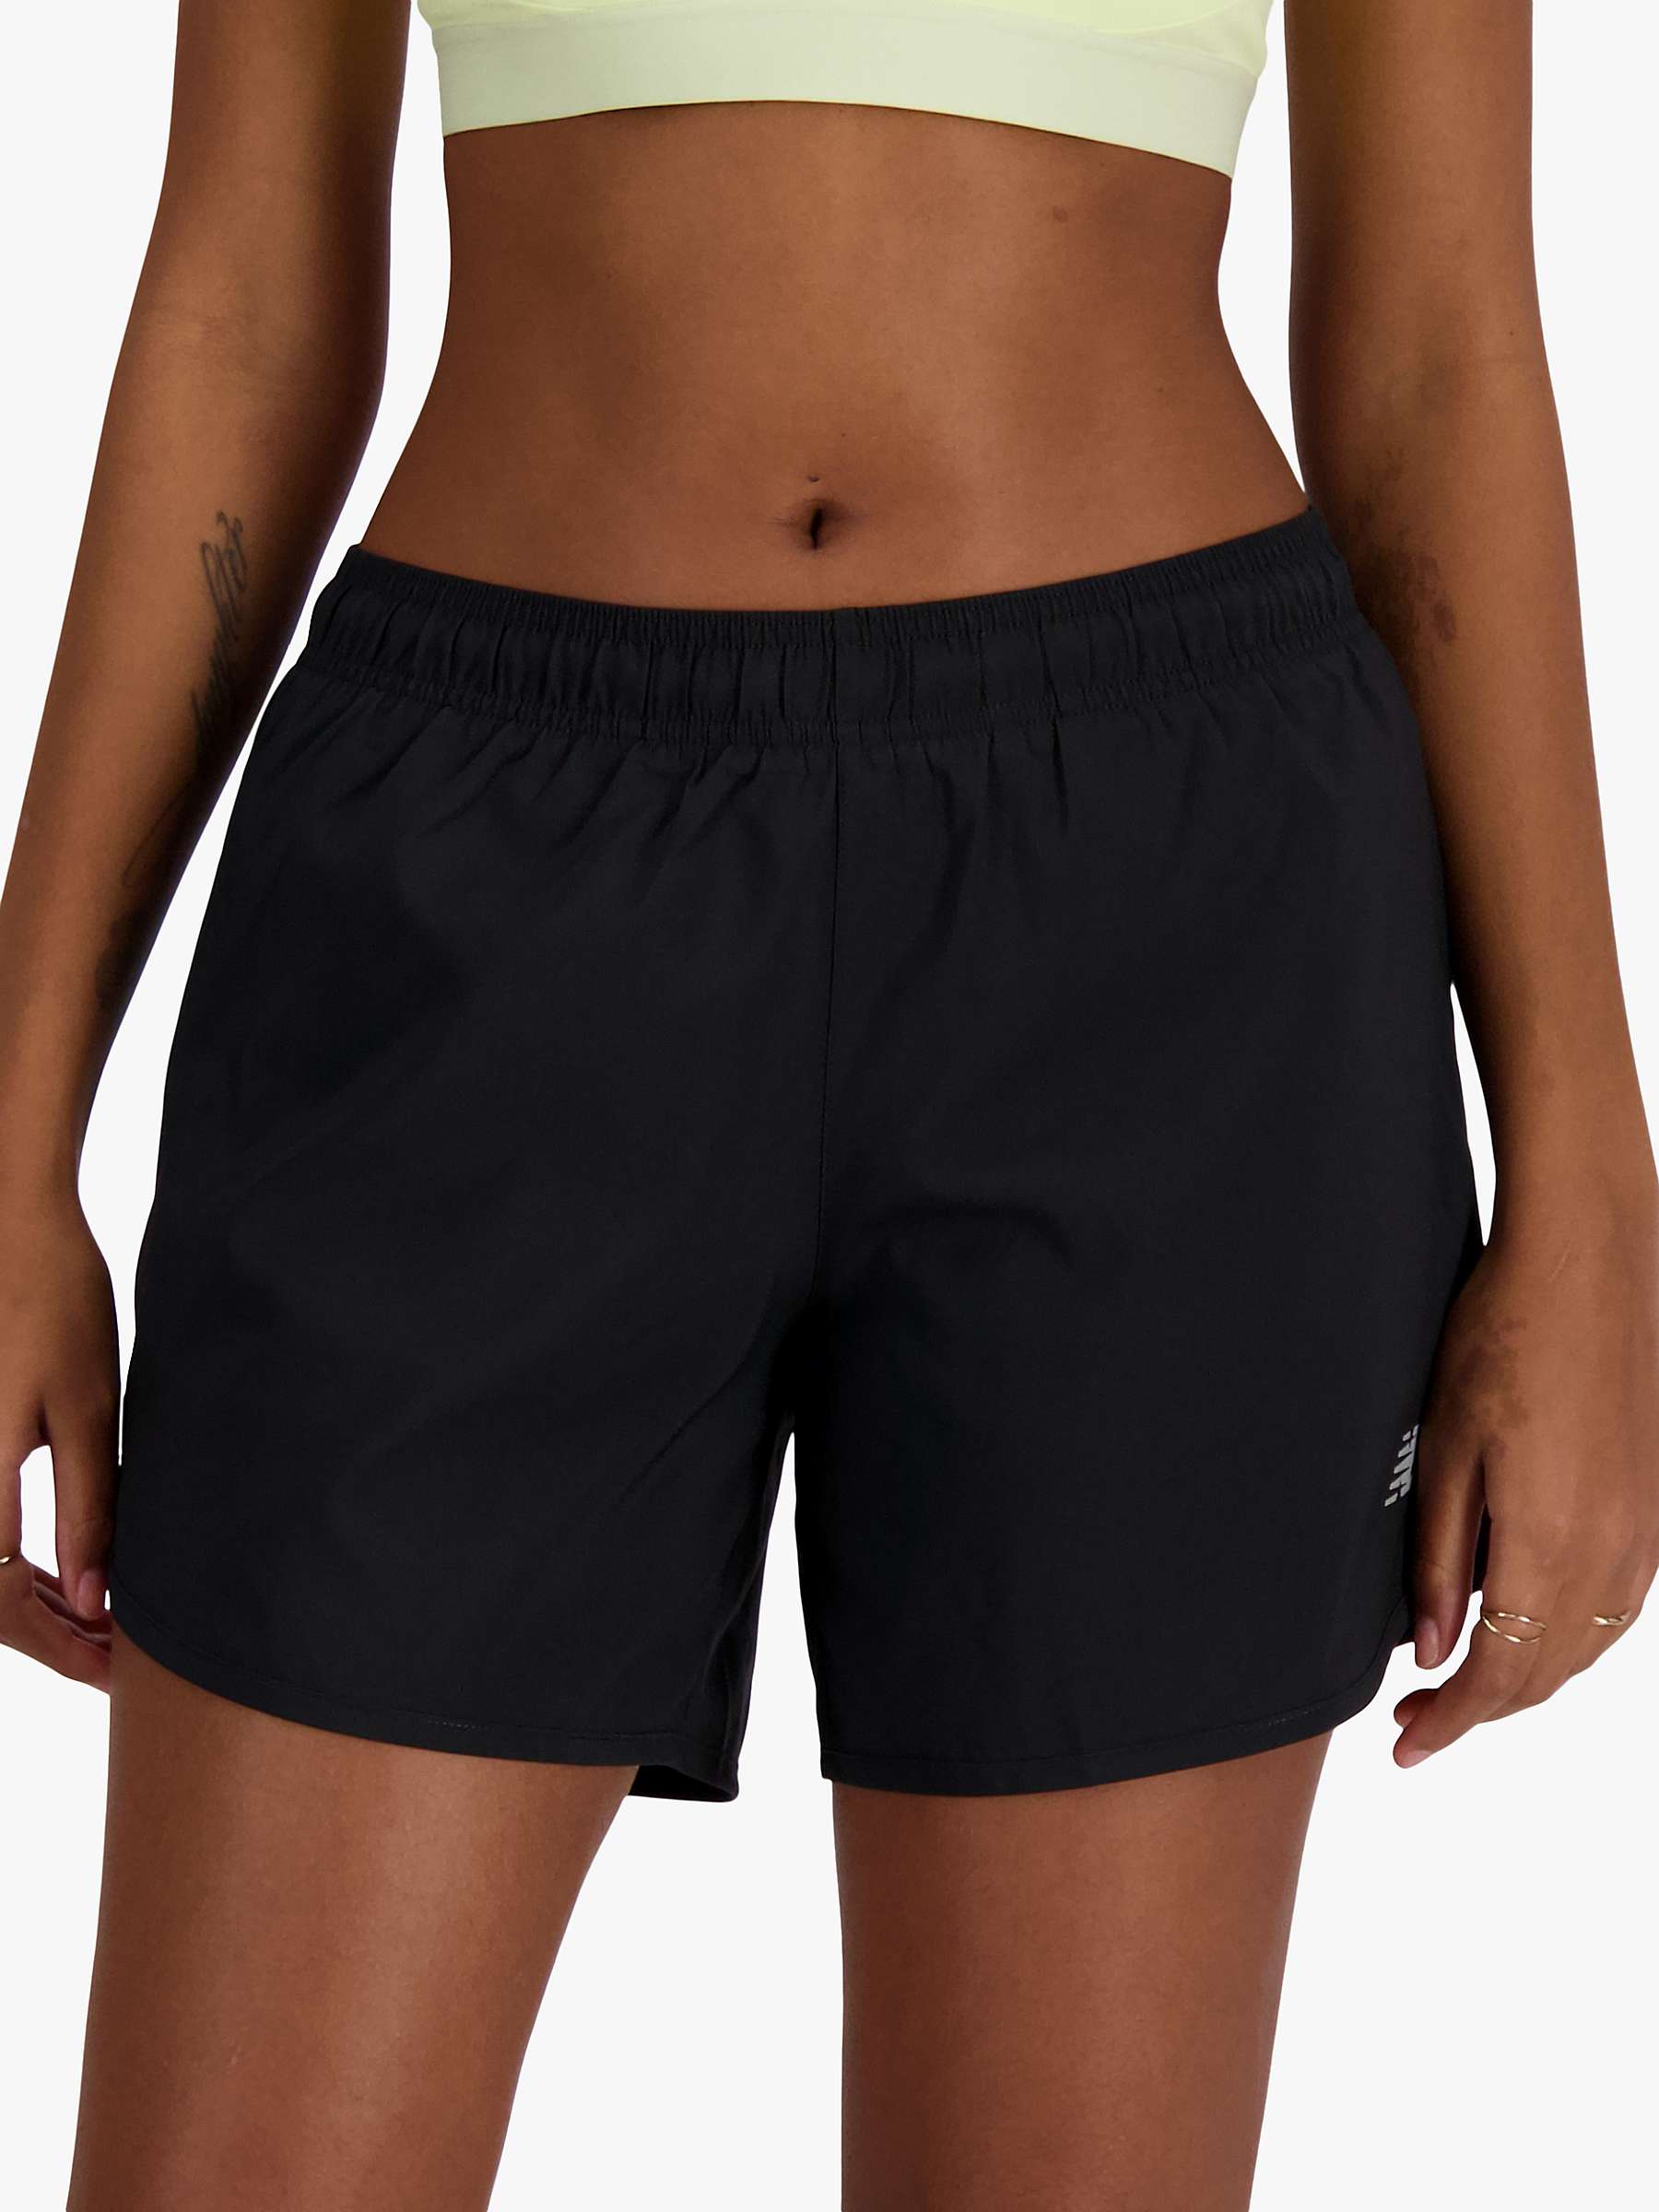 Buy New Balance Women's Shorts, Black Online at johnlewis.com